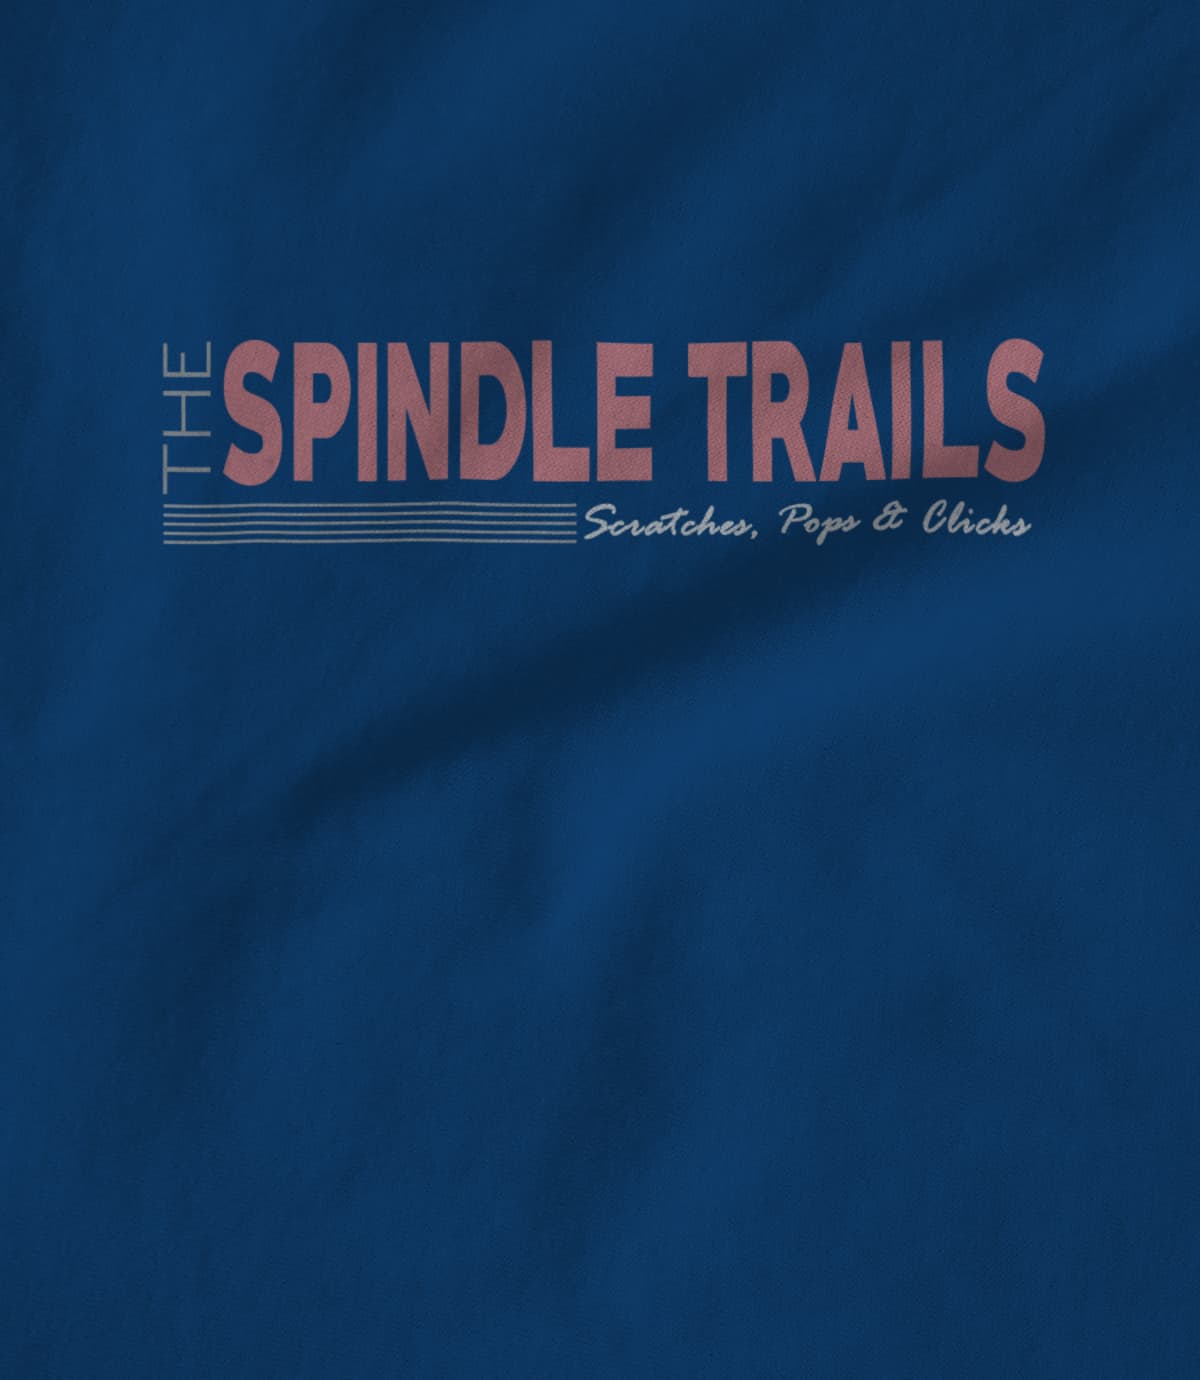 Spindle trails scratches pops   clicks   blue 1473083748